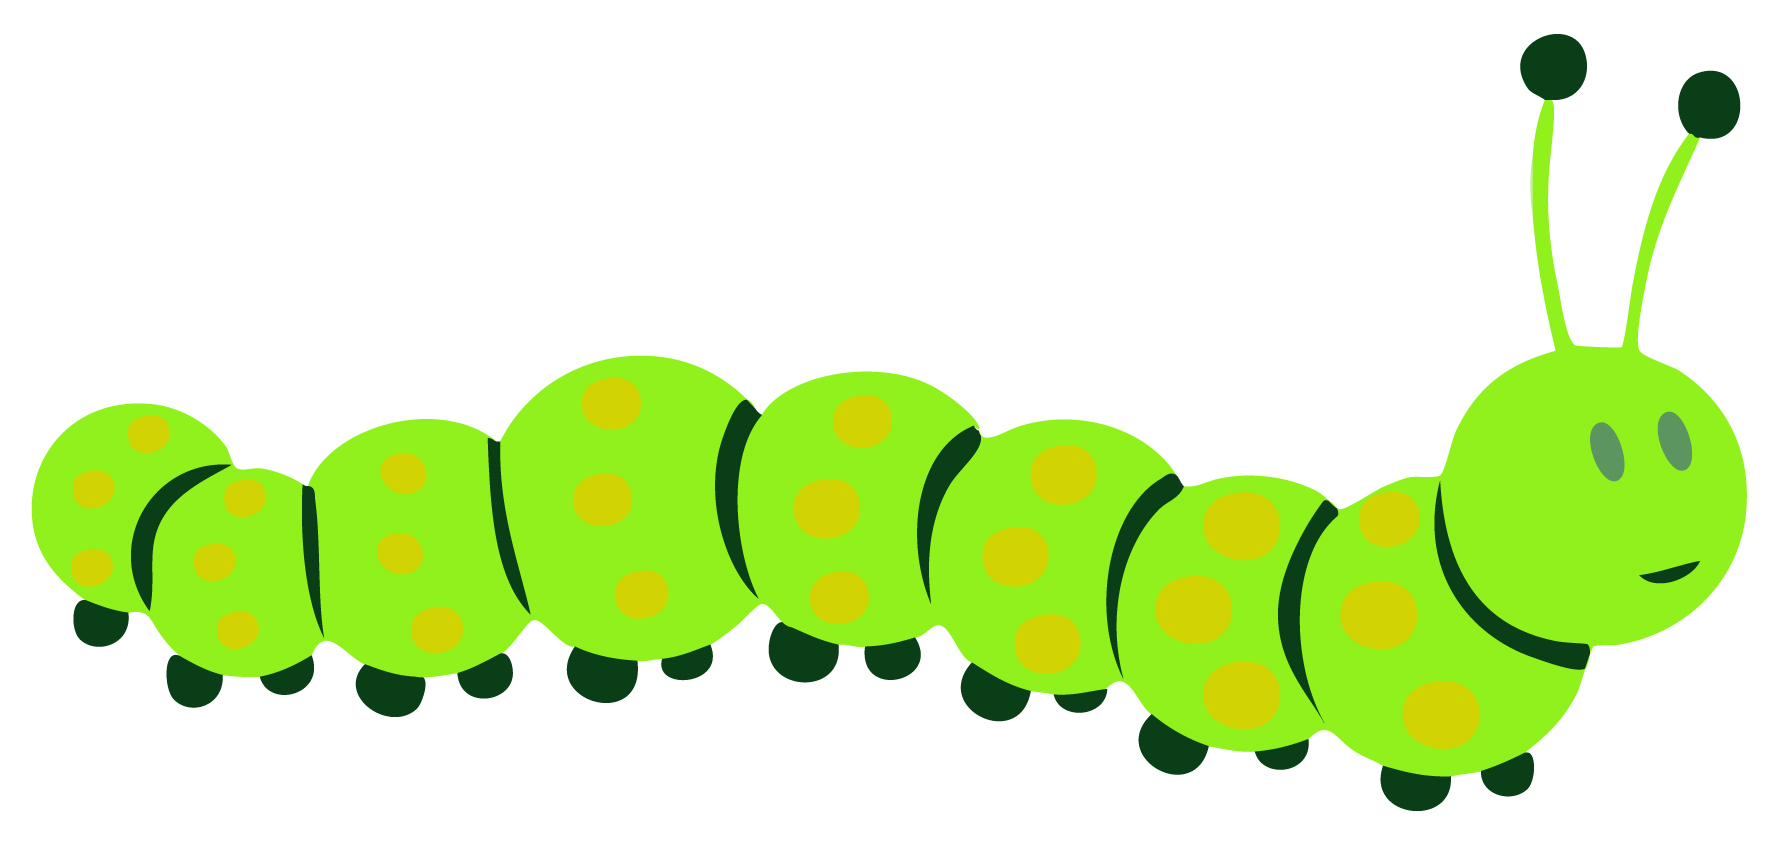 Caterpillar clipart #16, Download drawings